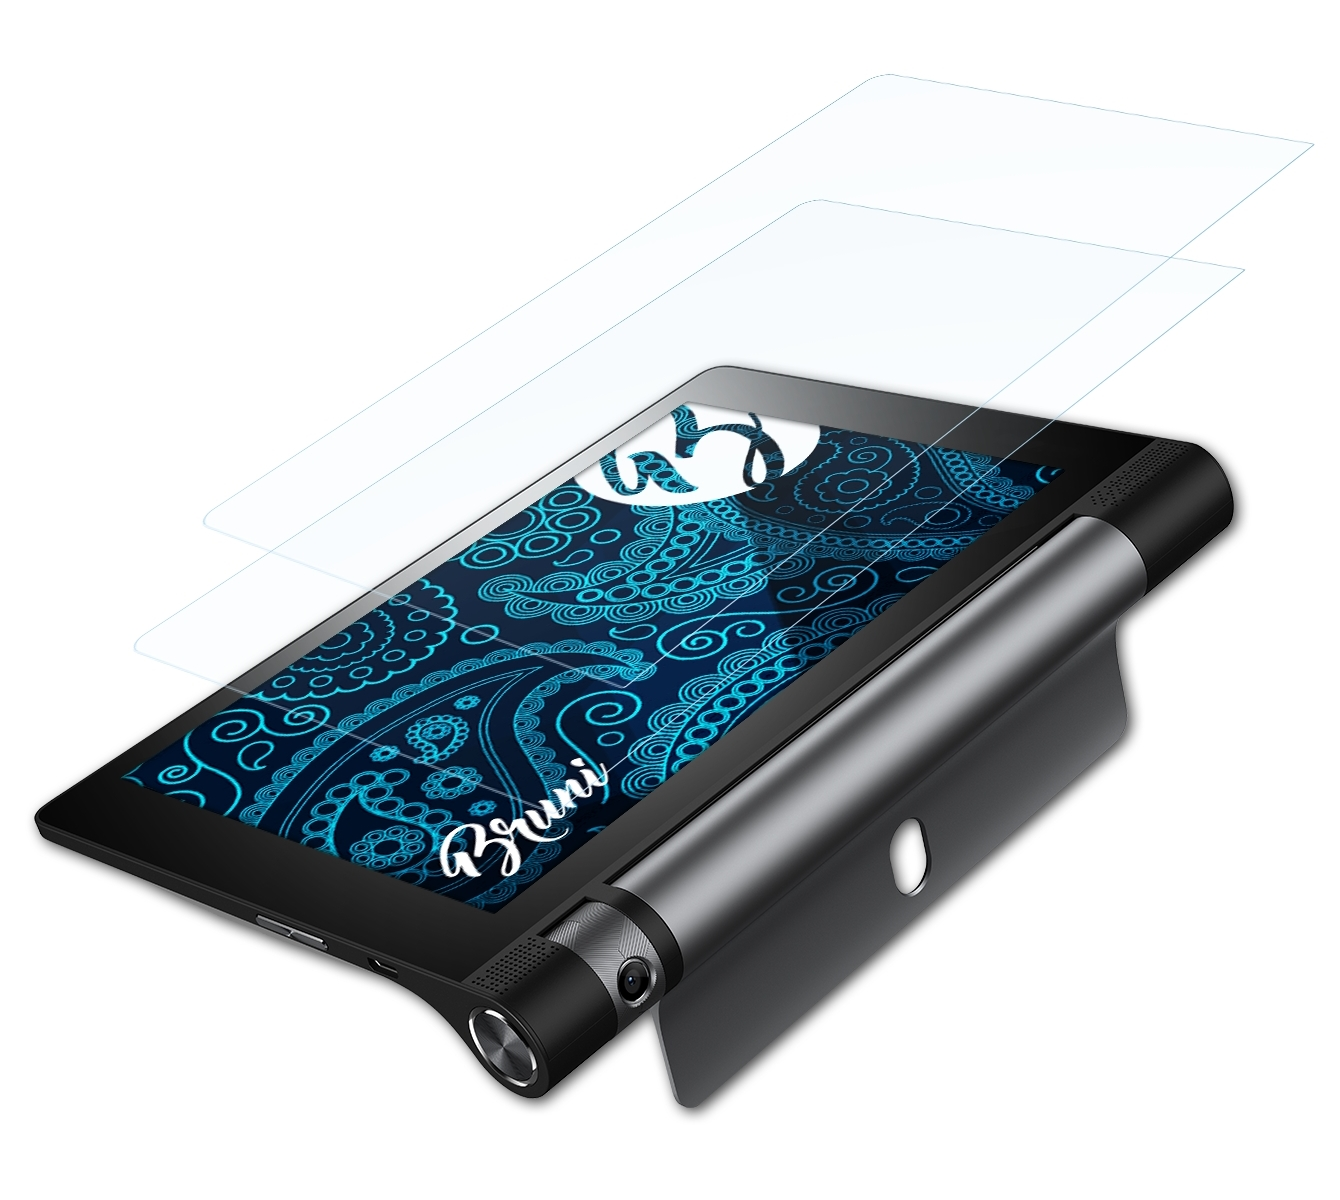 Yoga Tab 2x 3 8.0) Schutzfolie(für Lenovo Basics-Clear BRUNI